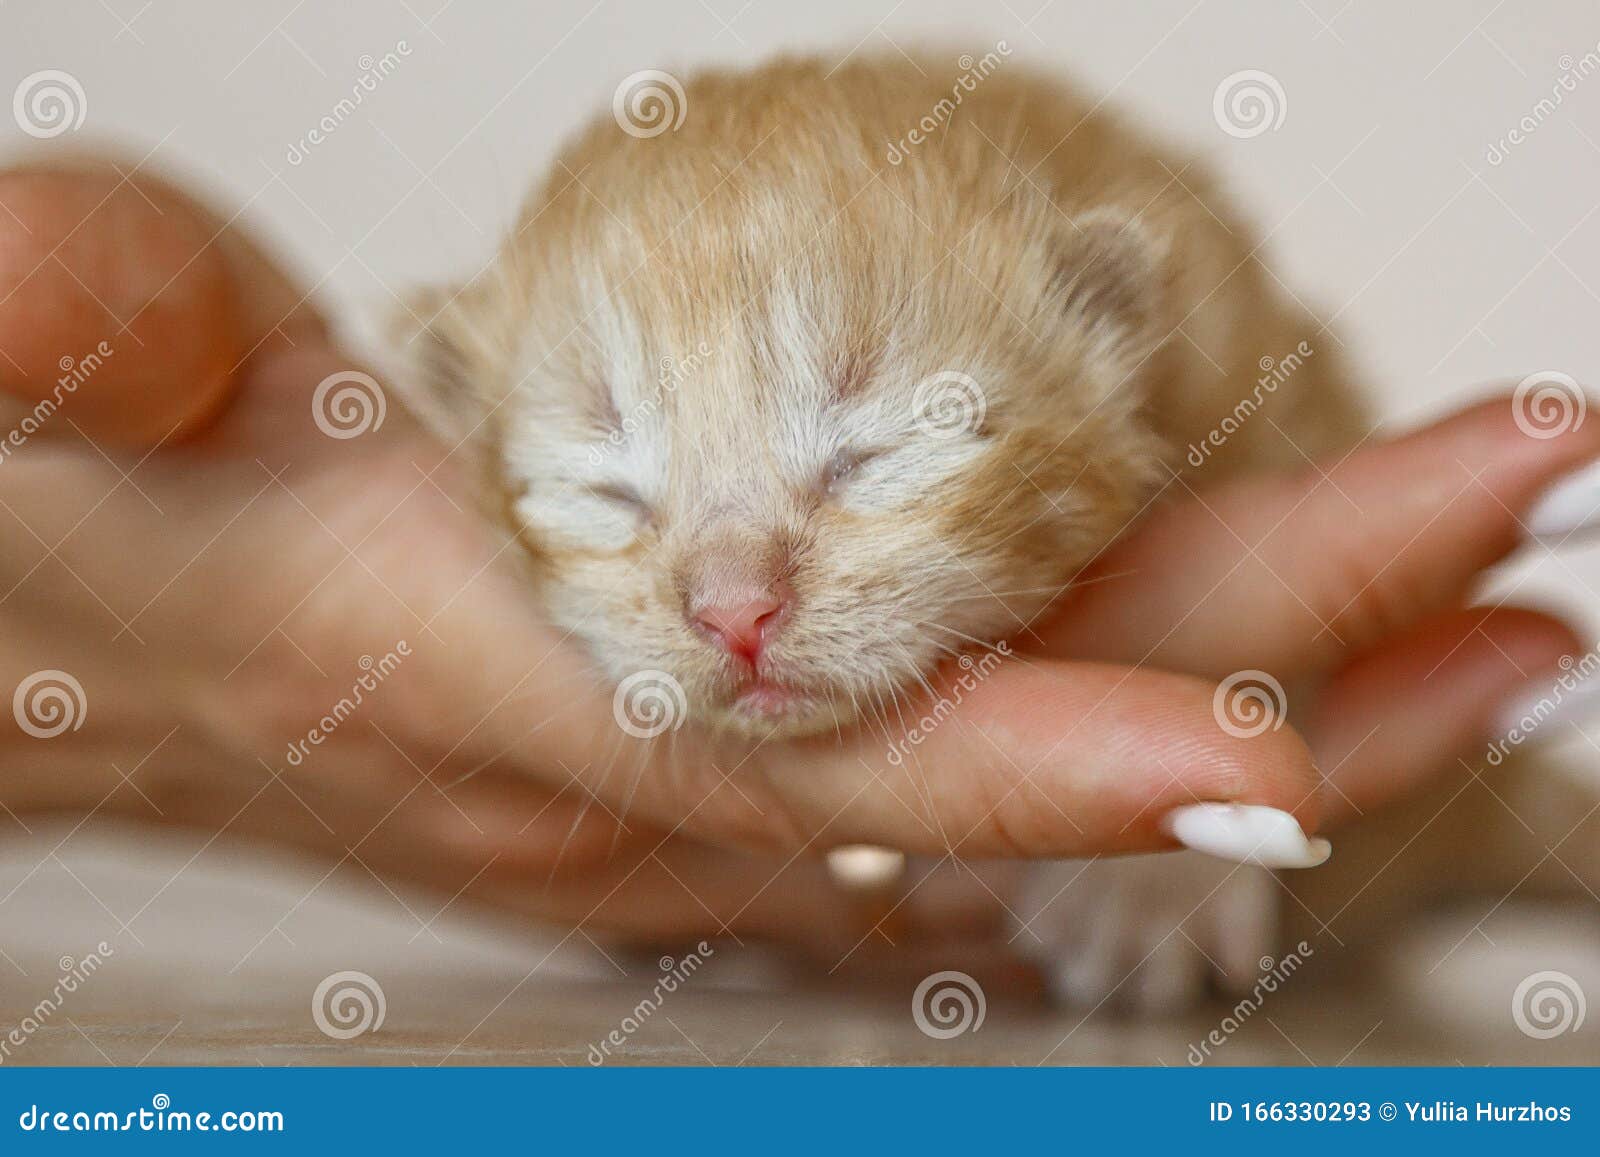 Beige, Small, Fluffy Cute Kitten In Hands Closeup. One ...